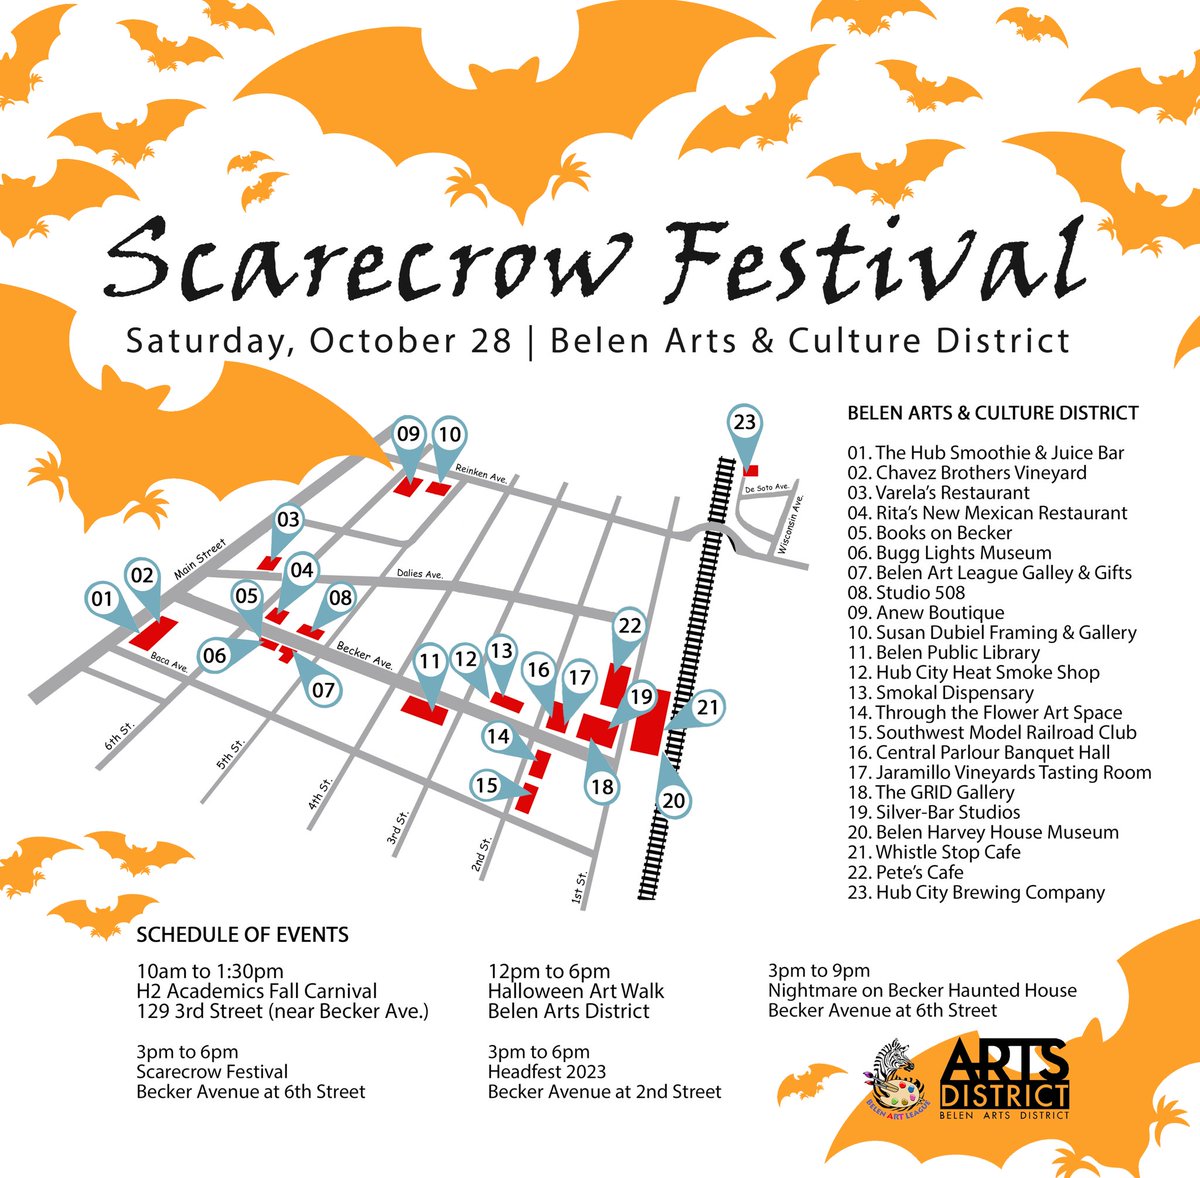 Scarecrow Festival this Saturday!
#art #artsandcrafts #scarecrowfestival #fallseason  #albuquerque #belennm #loslunasnm #valenciacountynm #newmexicoartists #newmexico